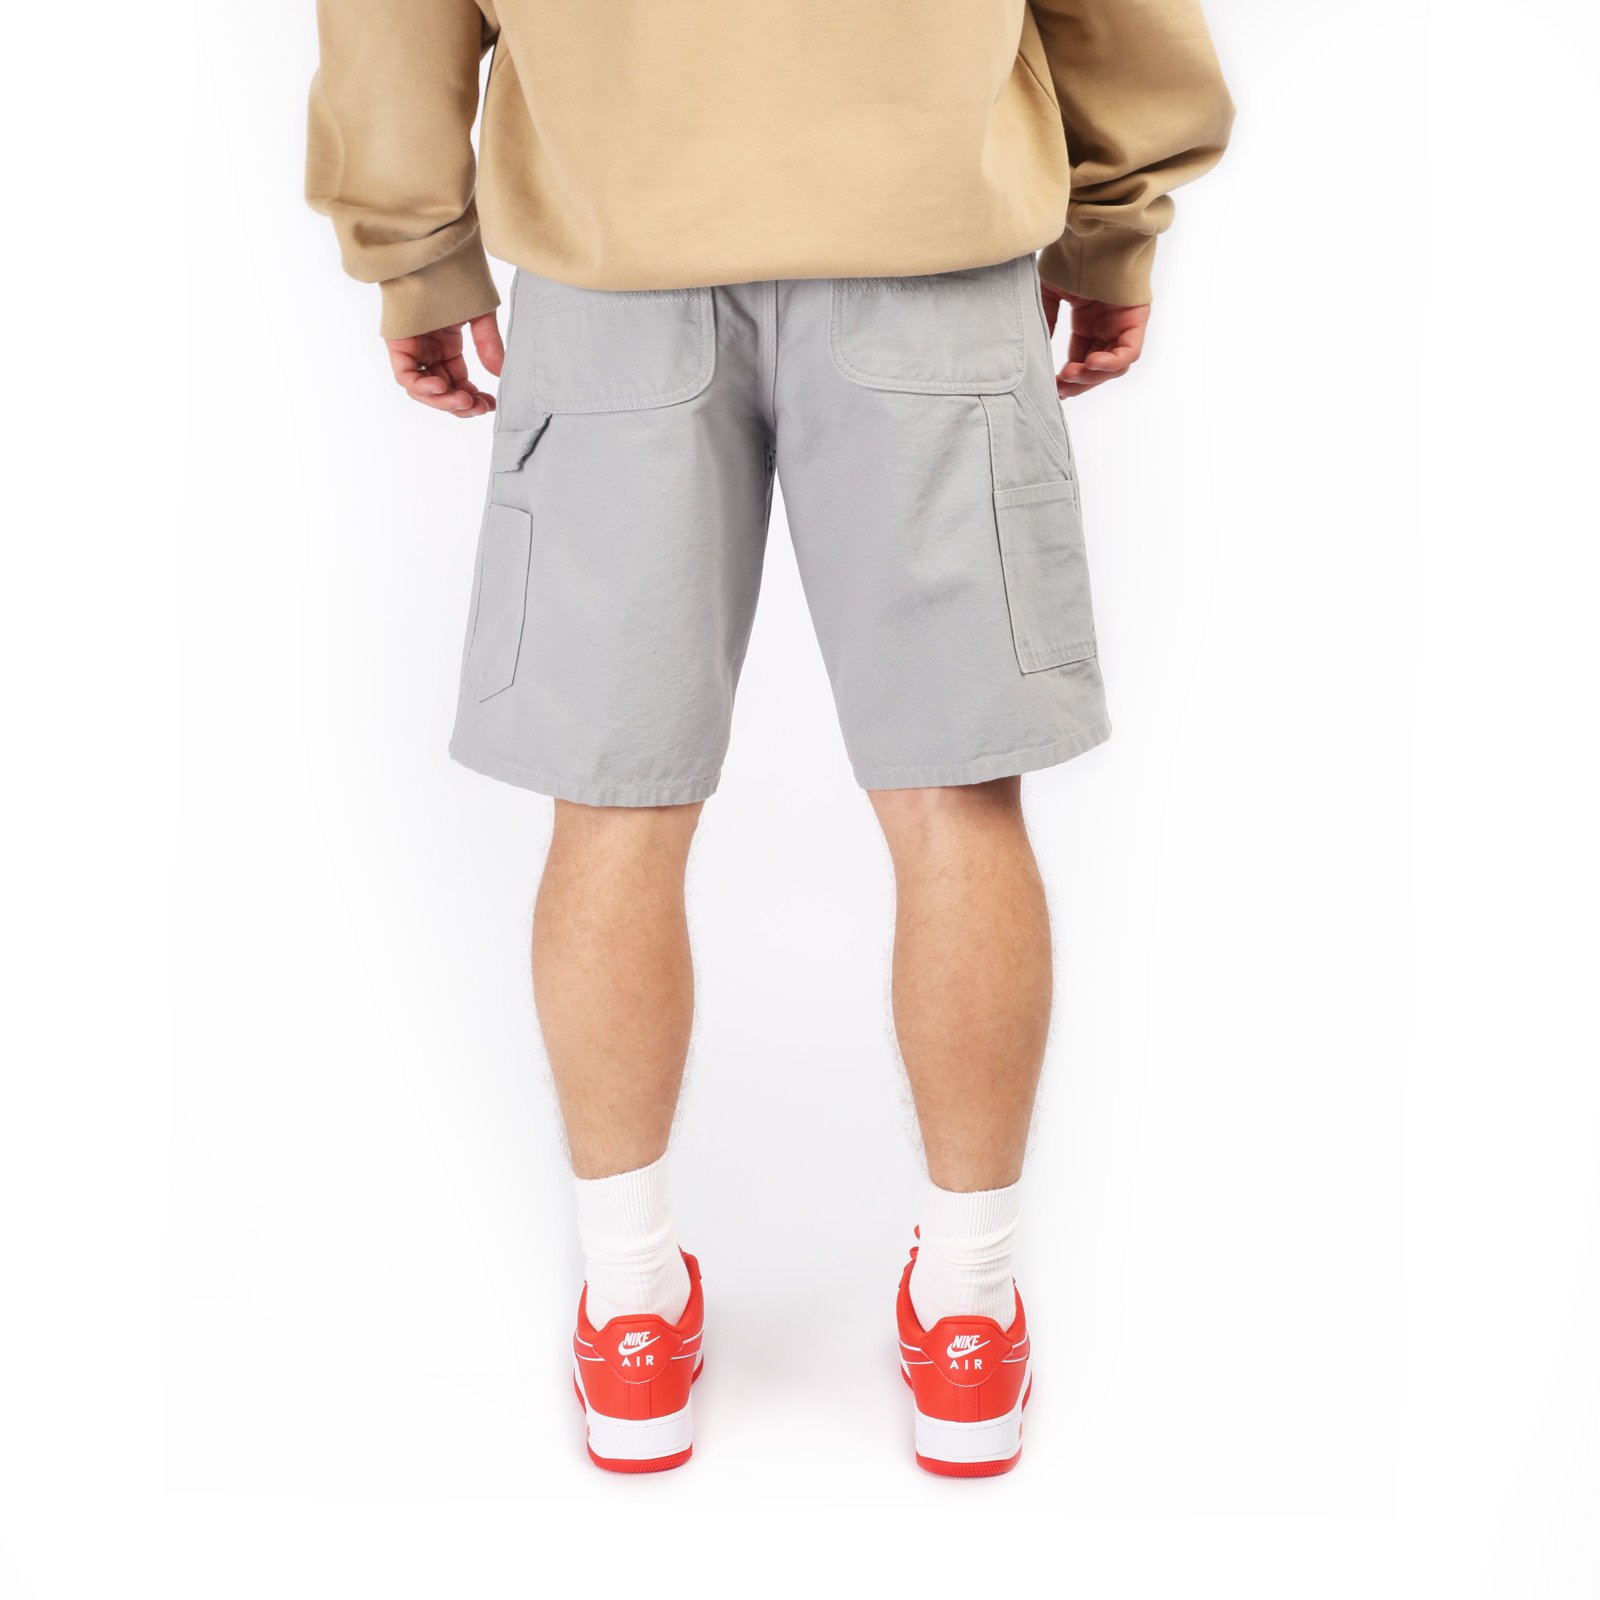 мужские шорты Carhartt WIP Single Knee Short  (I027942-marengo)  - цена, описание, фото 2